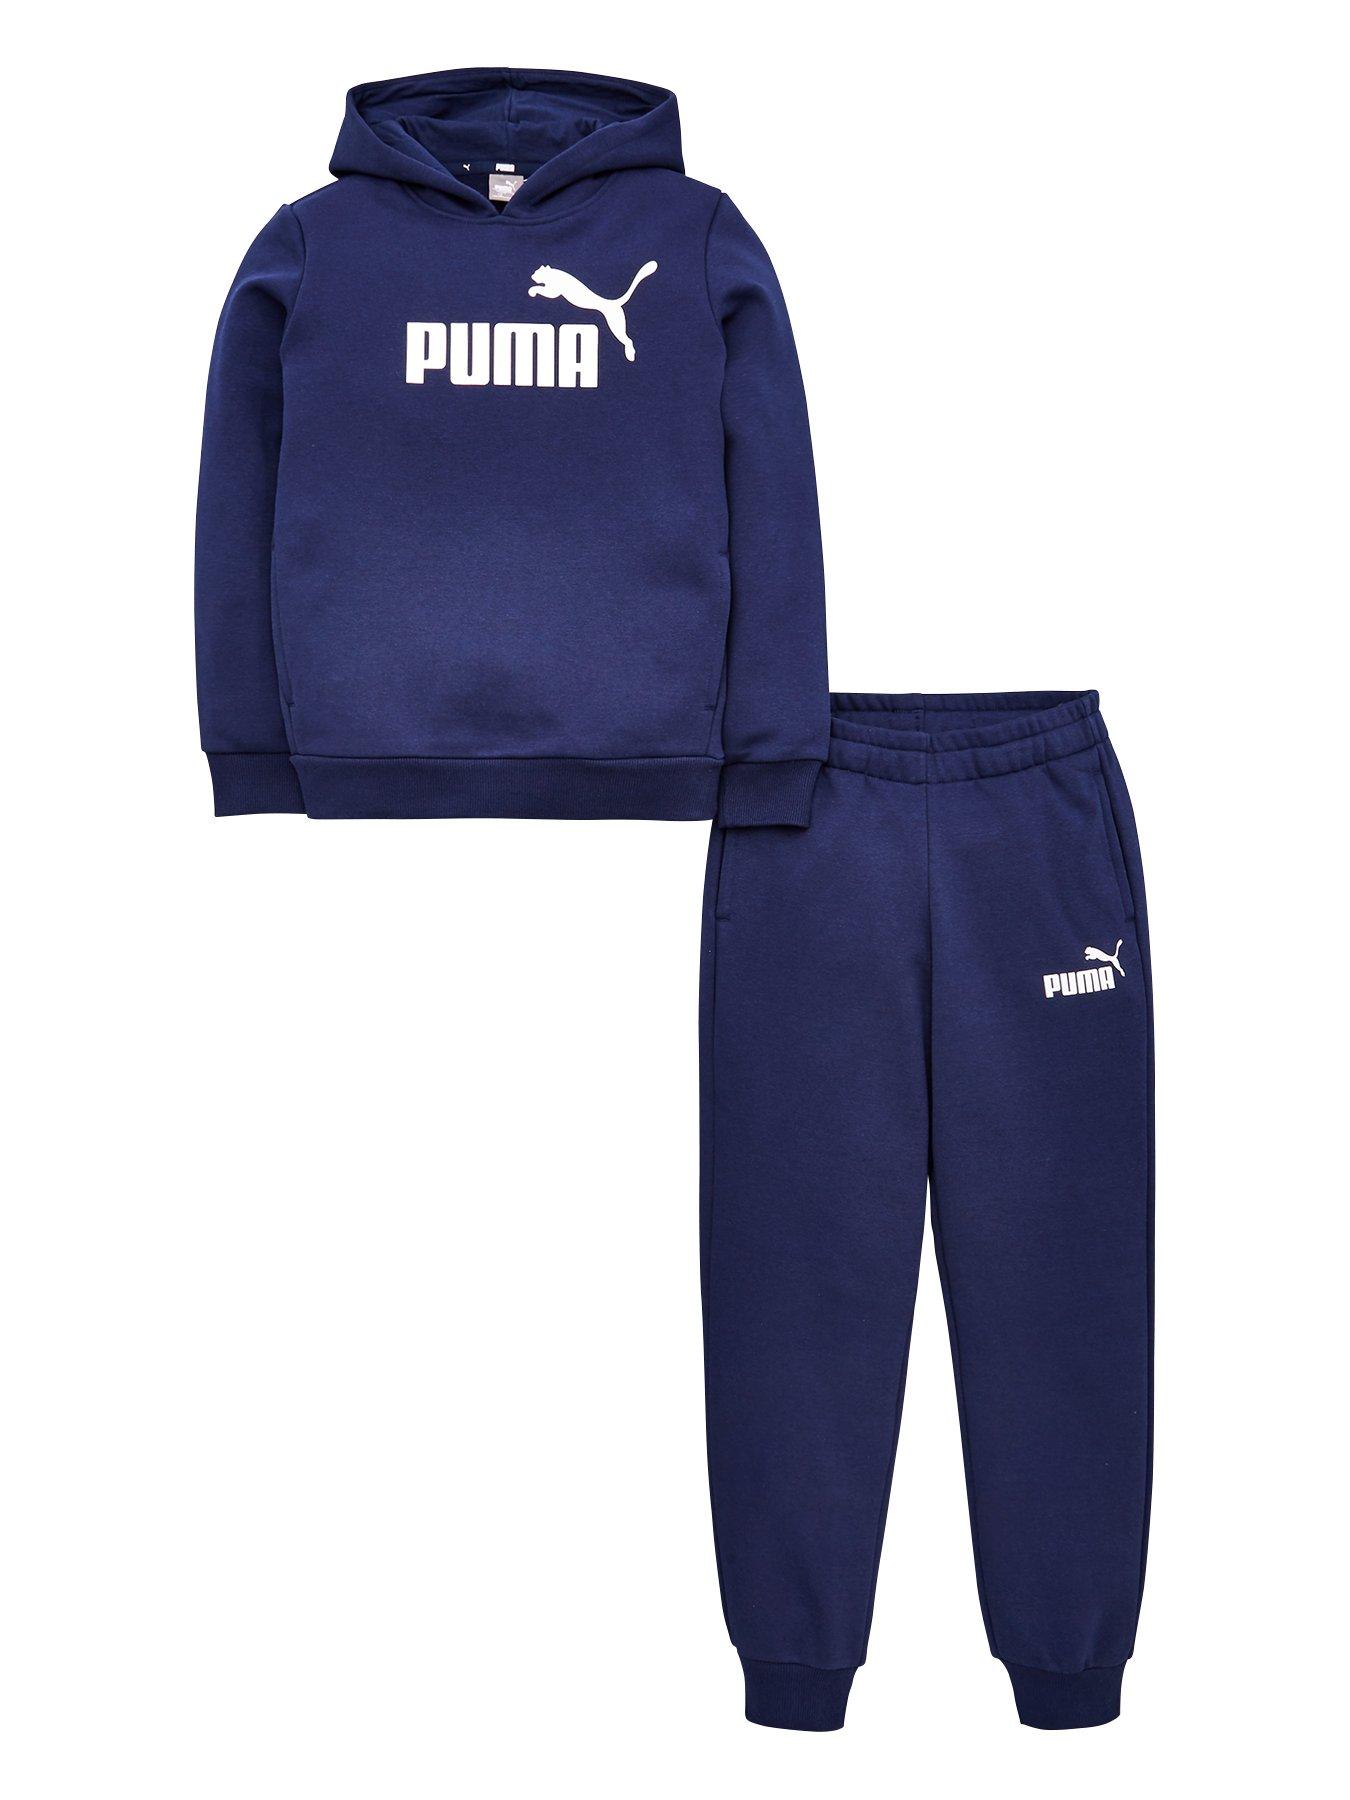 puma sweatsuit for kids